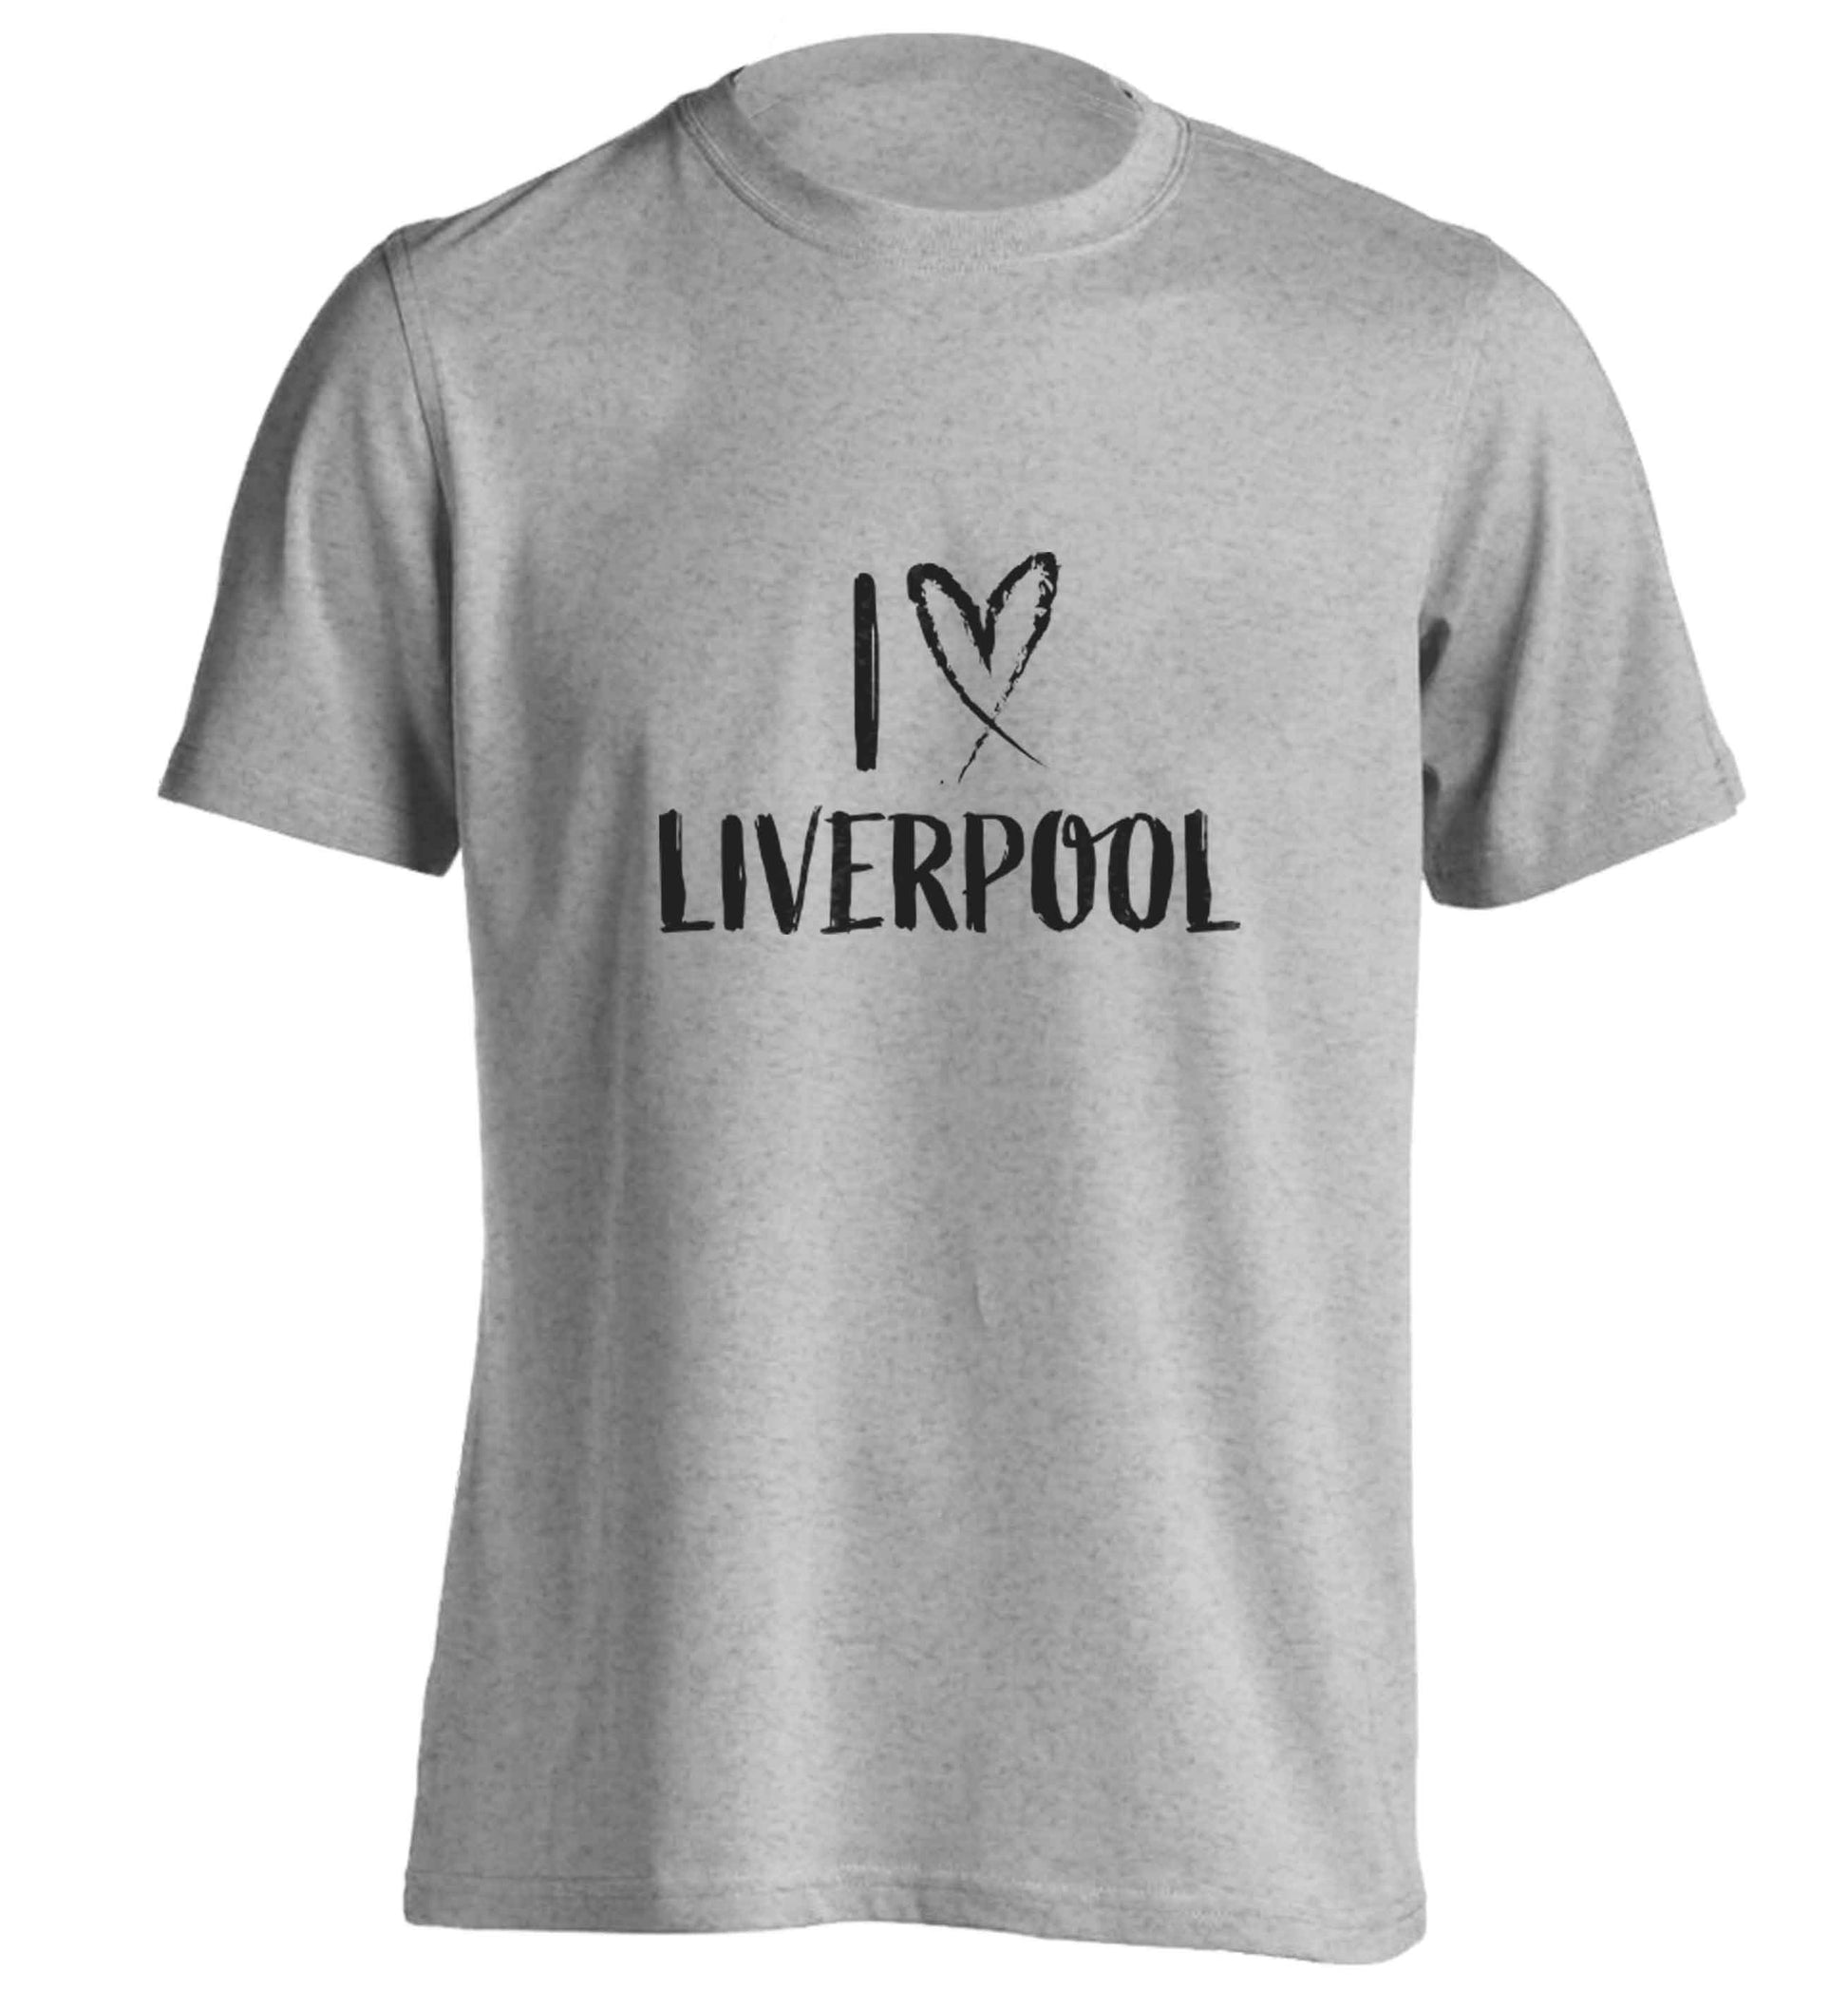 I love Liverpool adults unisex grey Tshirt 2XL